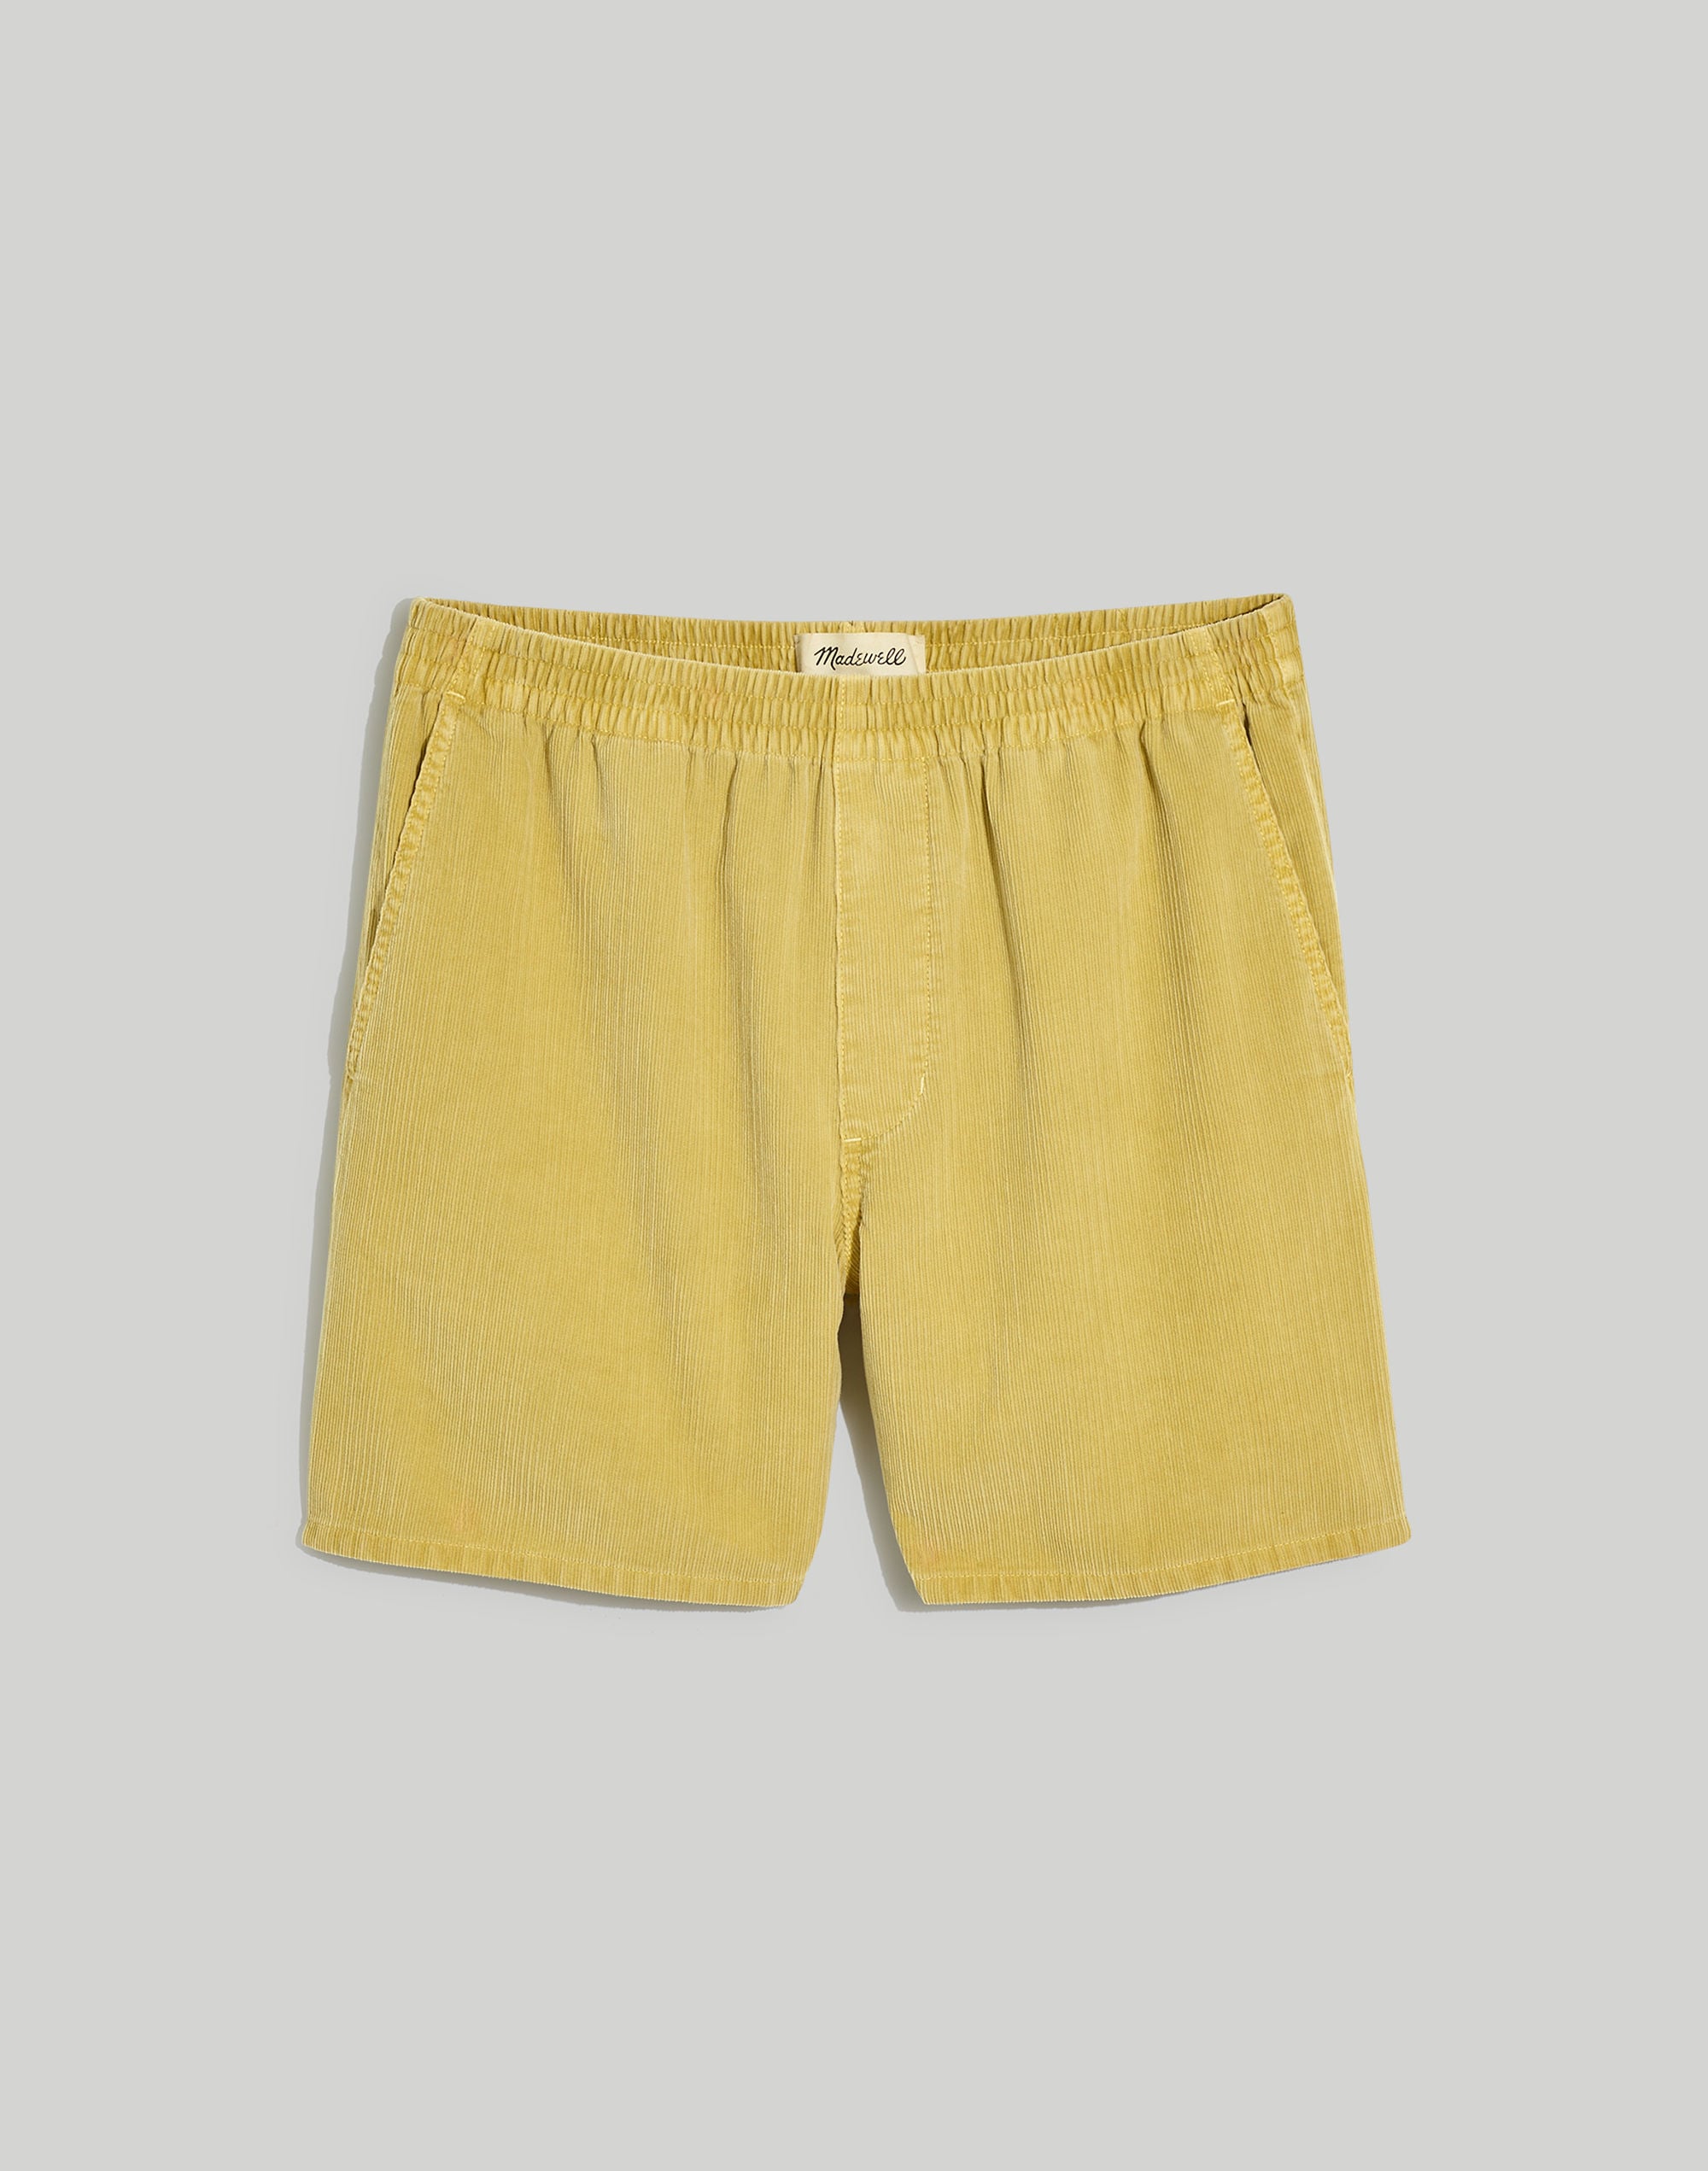 Knot Melrose corduroy shorts - Yellow